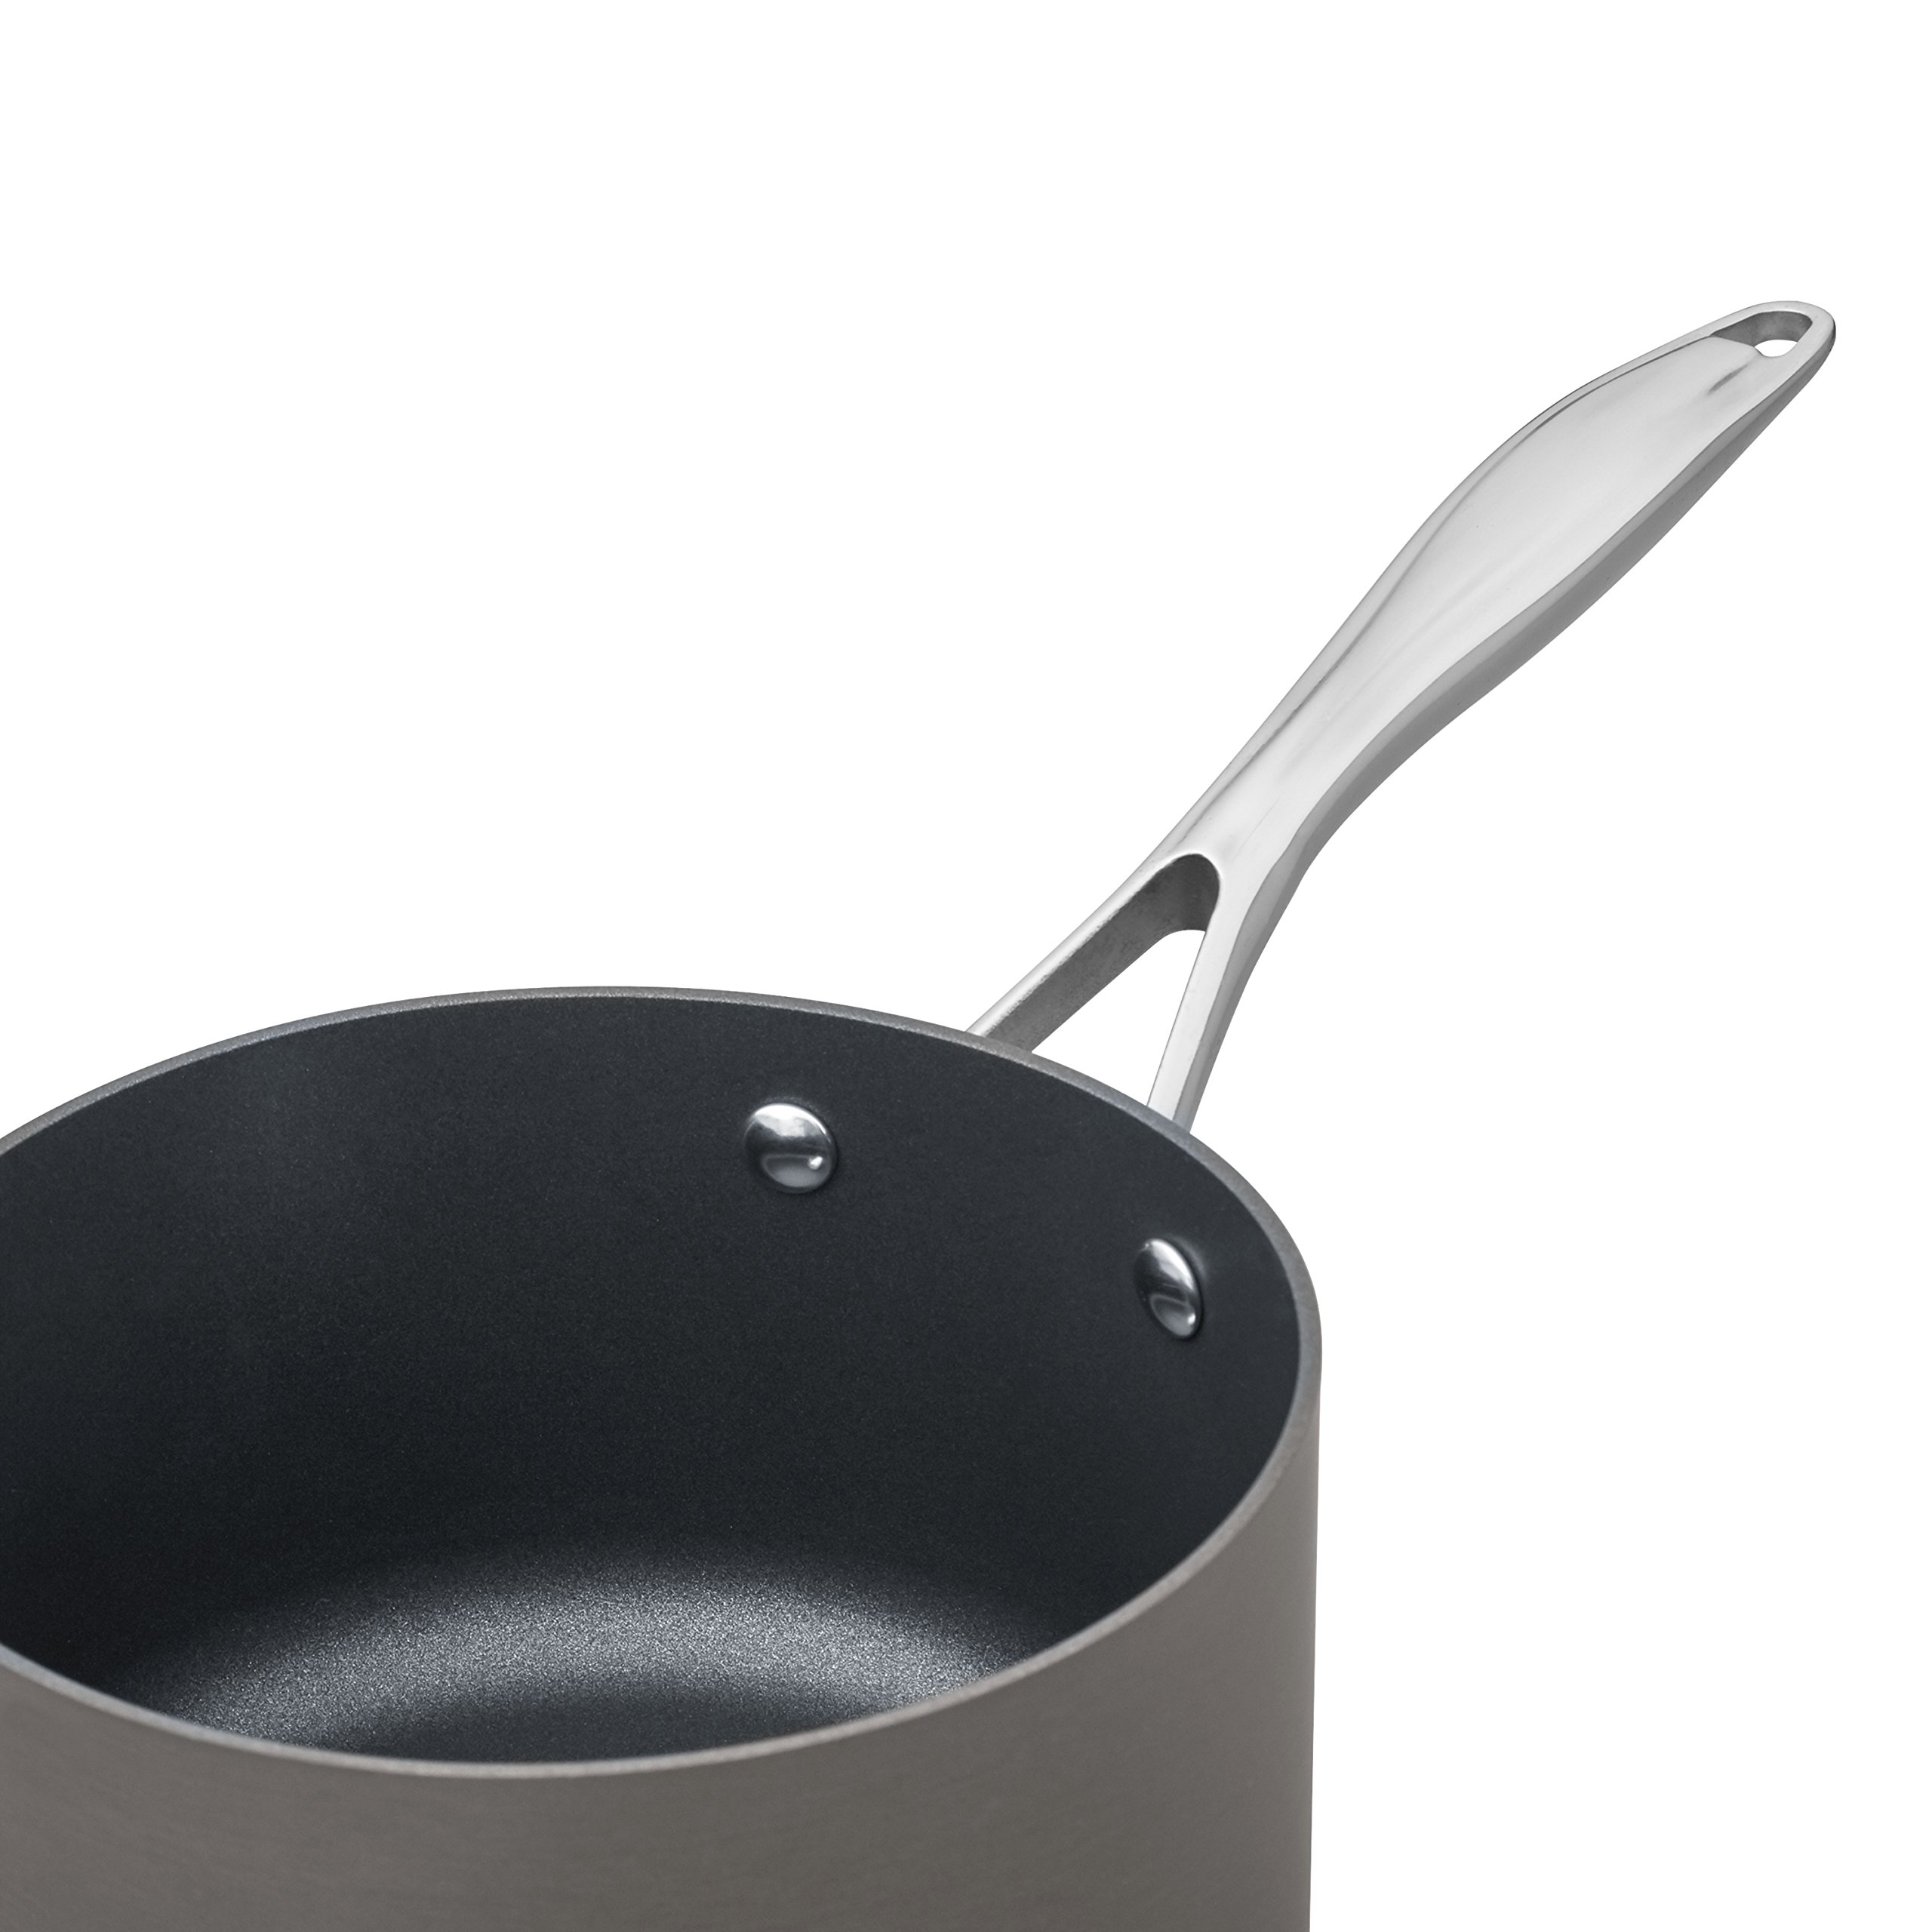 Amazon Brand - Stone & Beam Sauce Pan With Lid, 2-Quart, Hard-Anodized Non-Stick Aluminum, Gray